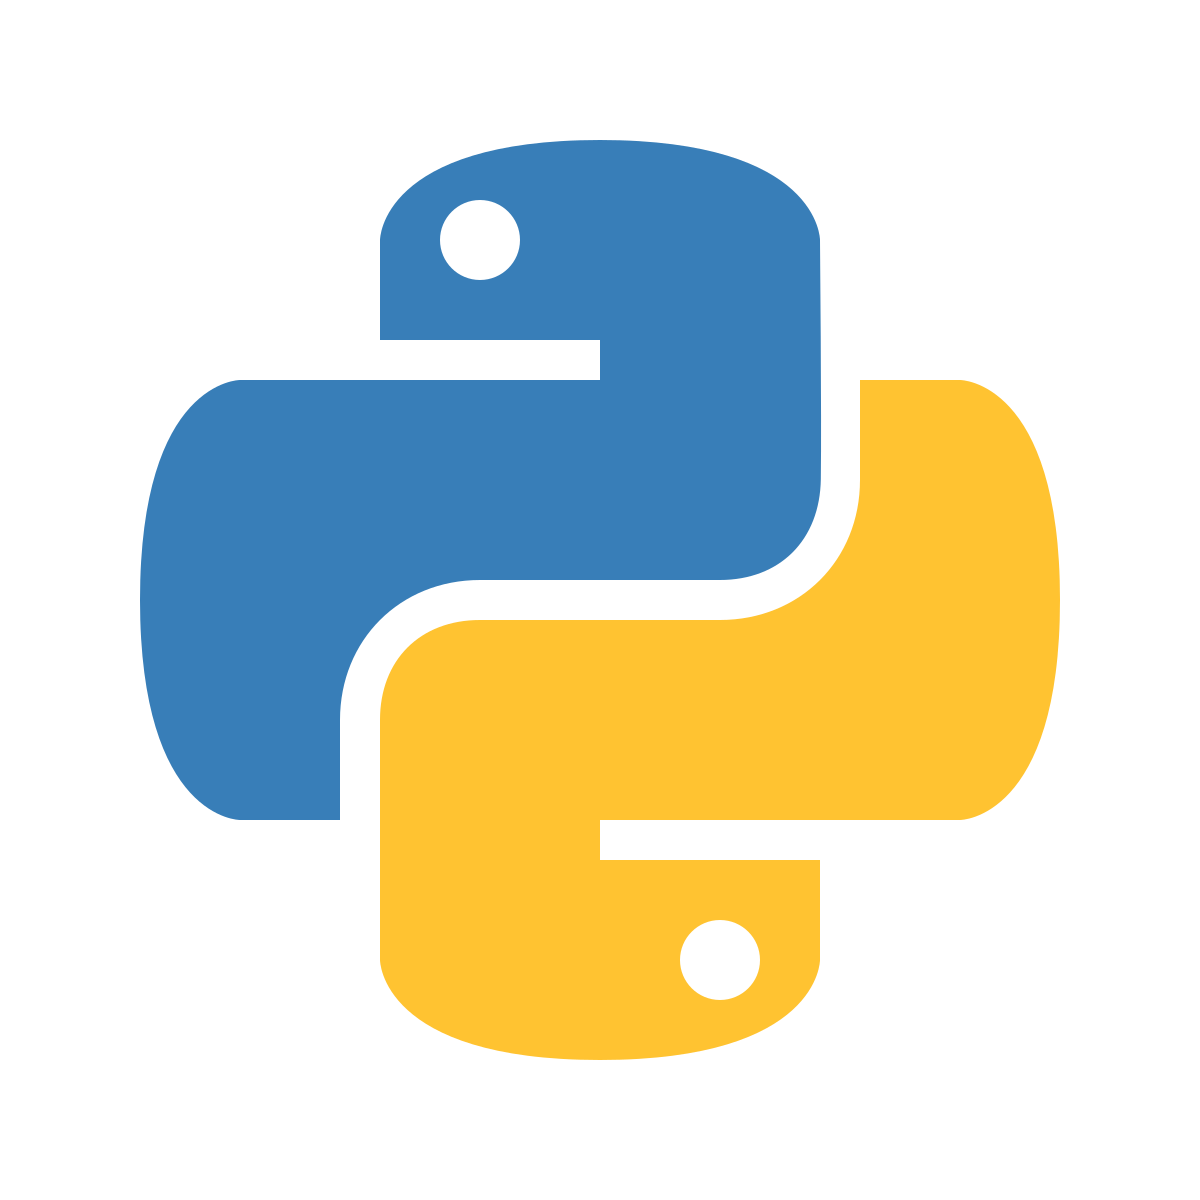 [Python] np.random - 난수 생성하기